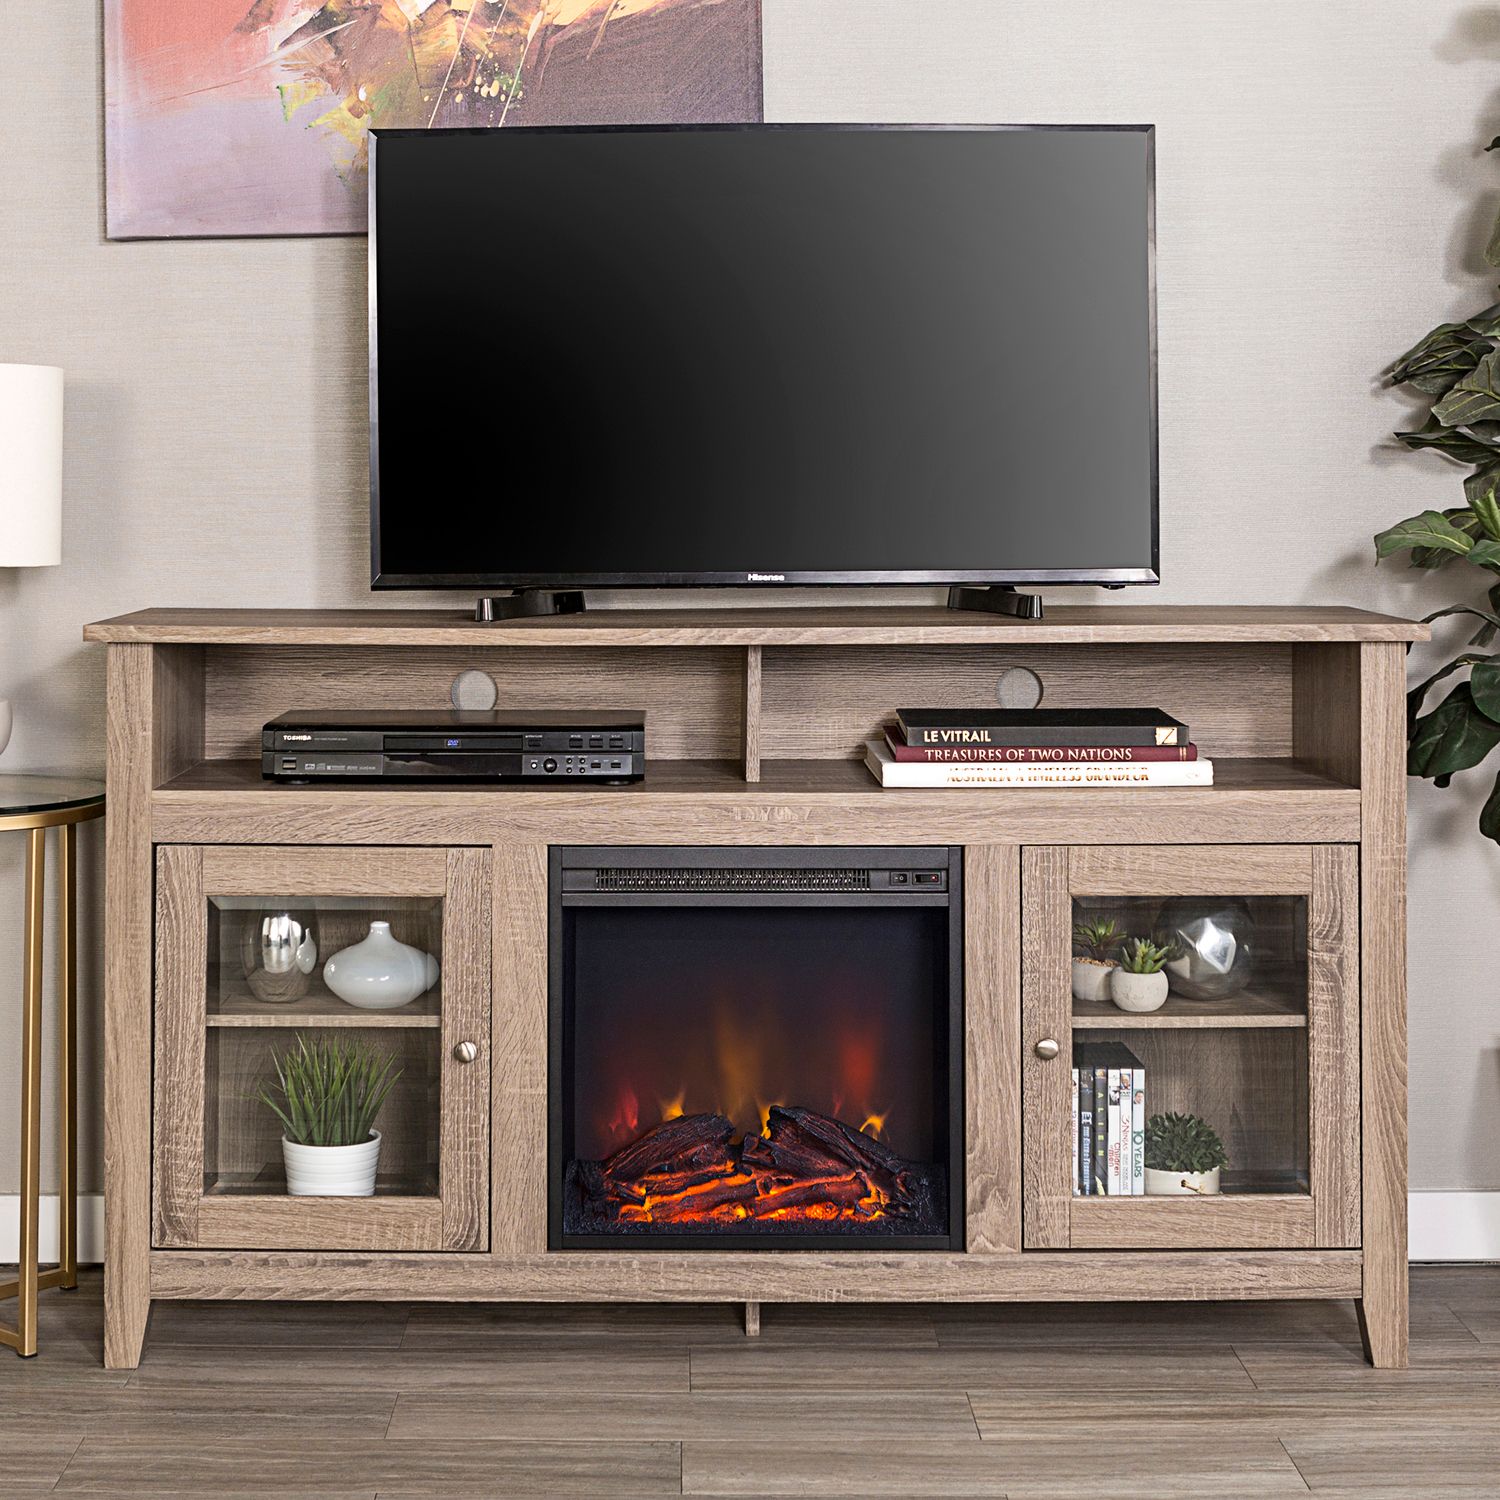 Highboy Wood Fireplace Tv Stand – Pier1 Throughout Wood Highboy Fireplace Tv Stands (View 11 of 20)